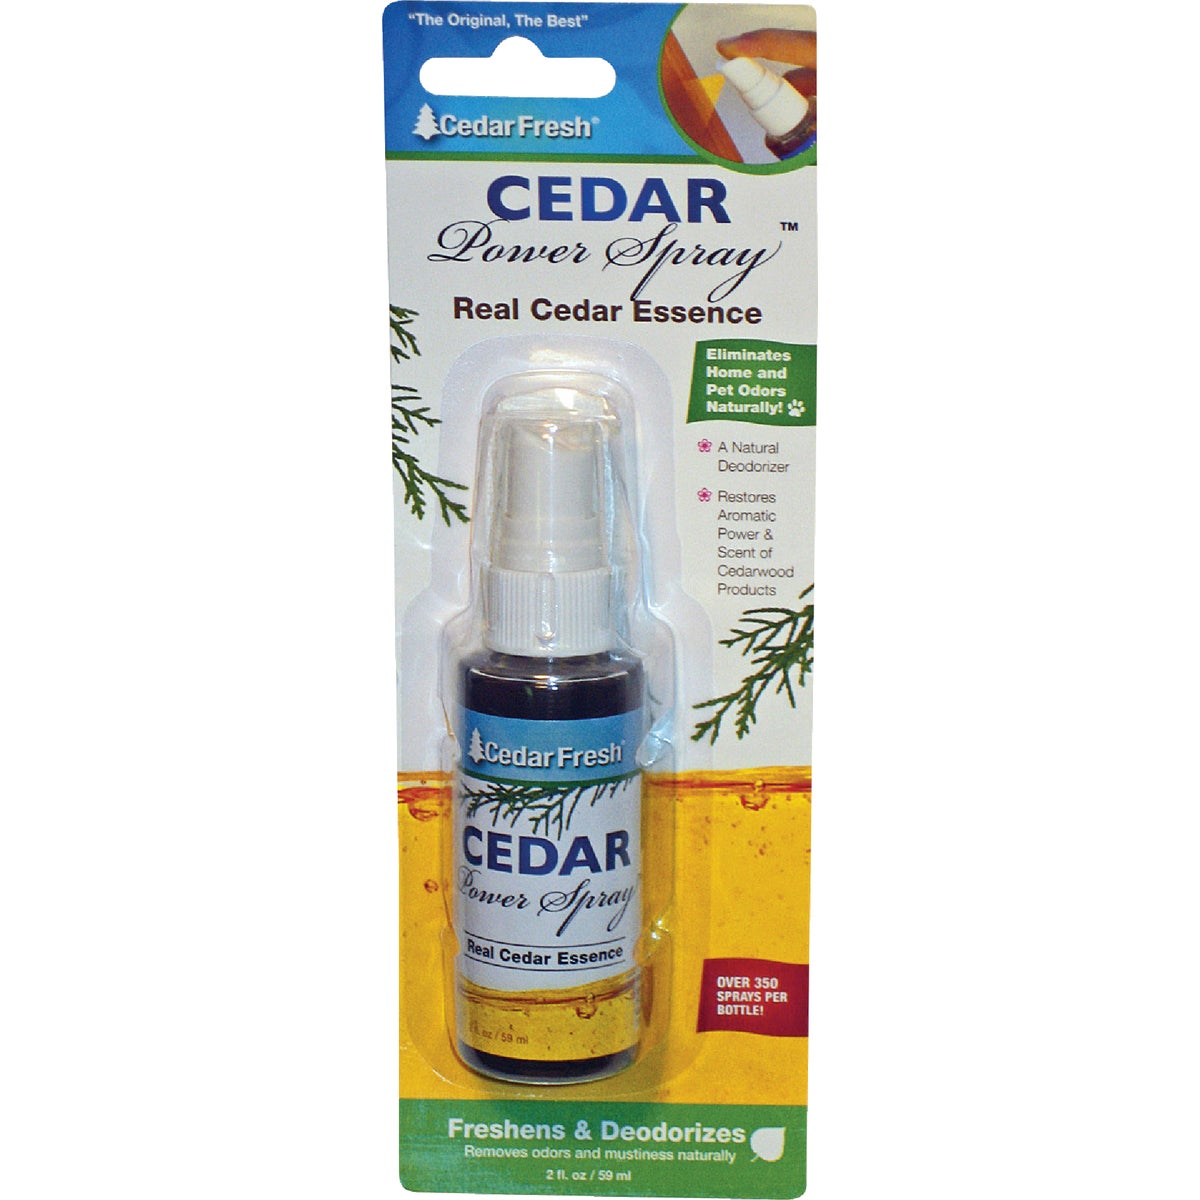 Item 622958, The original and only Cedar Power spray made from real cedar essence.